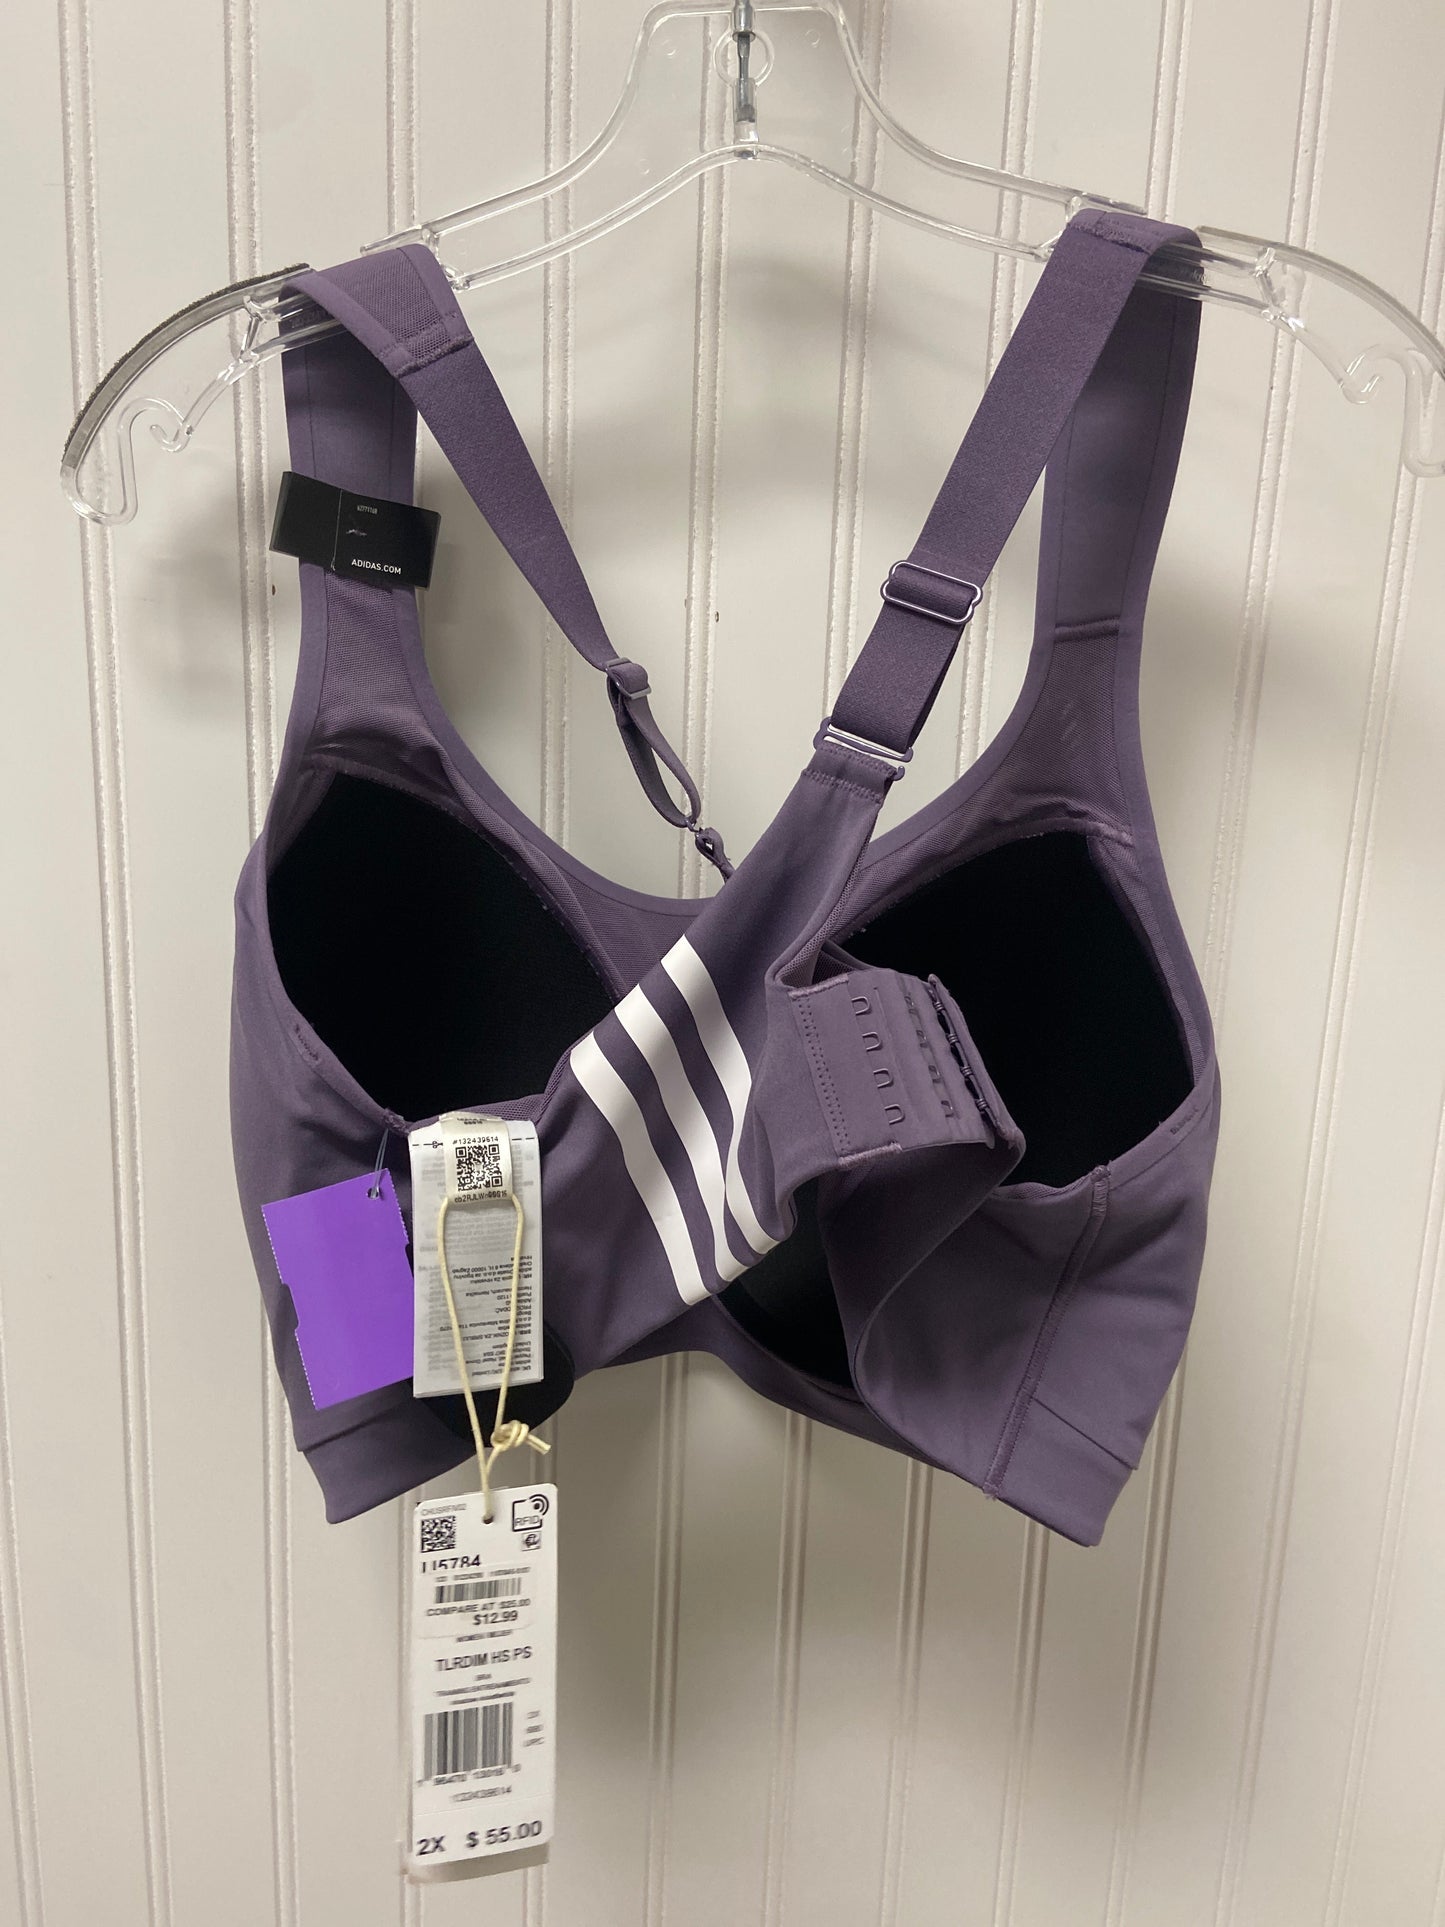 Purple Athletic Bra Adidas, Size 2x